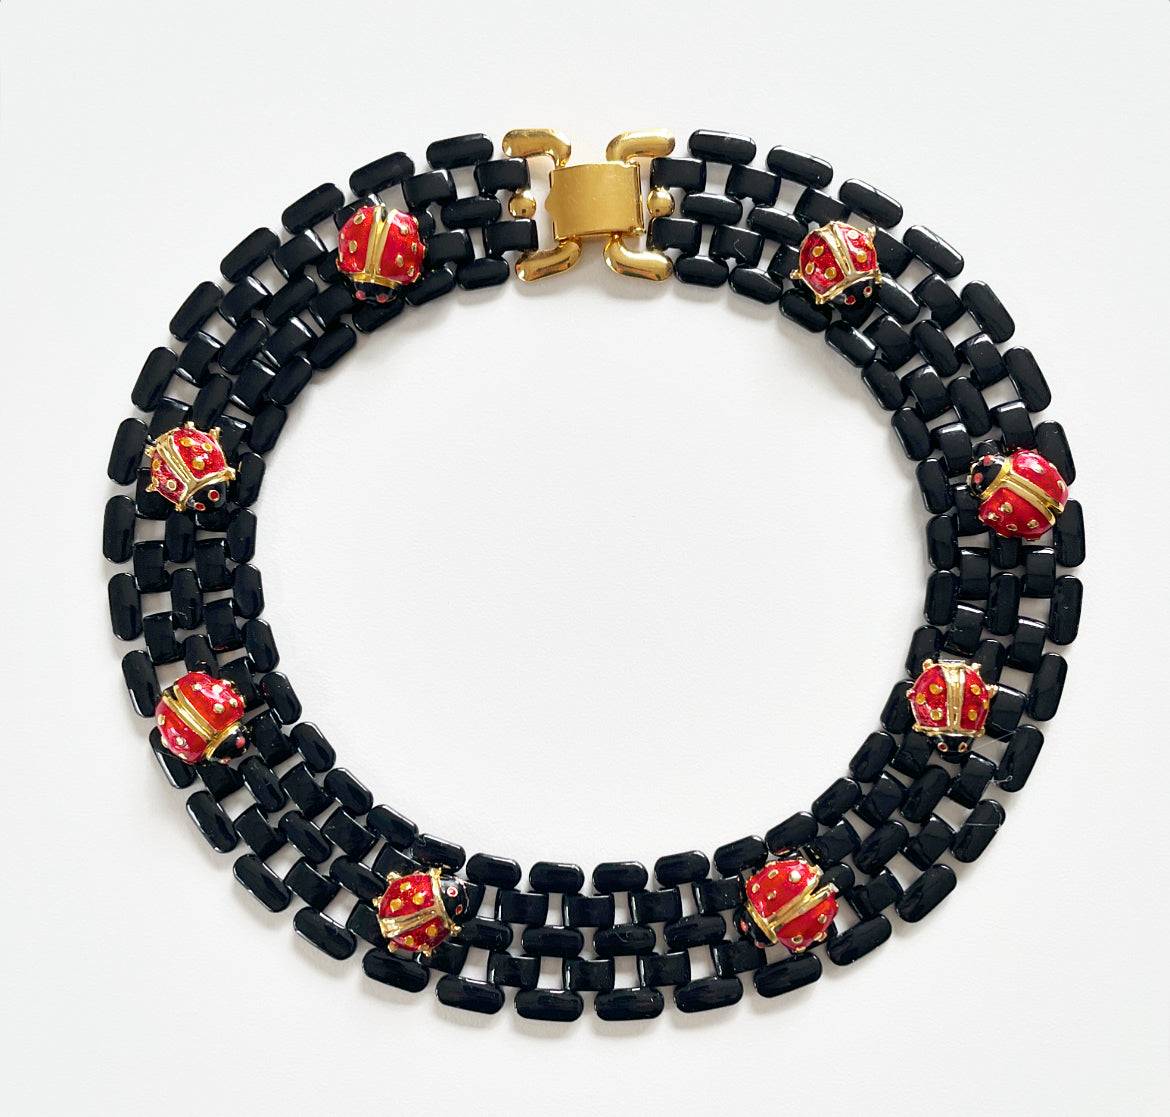 Ladybug garden necklace